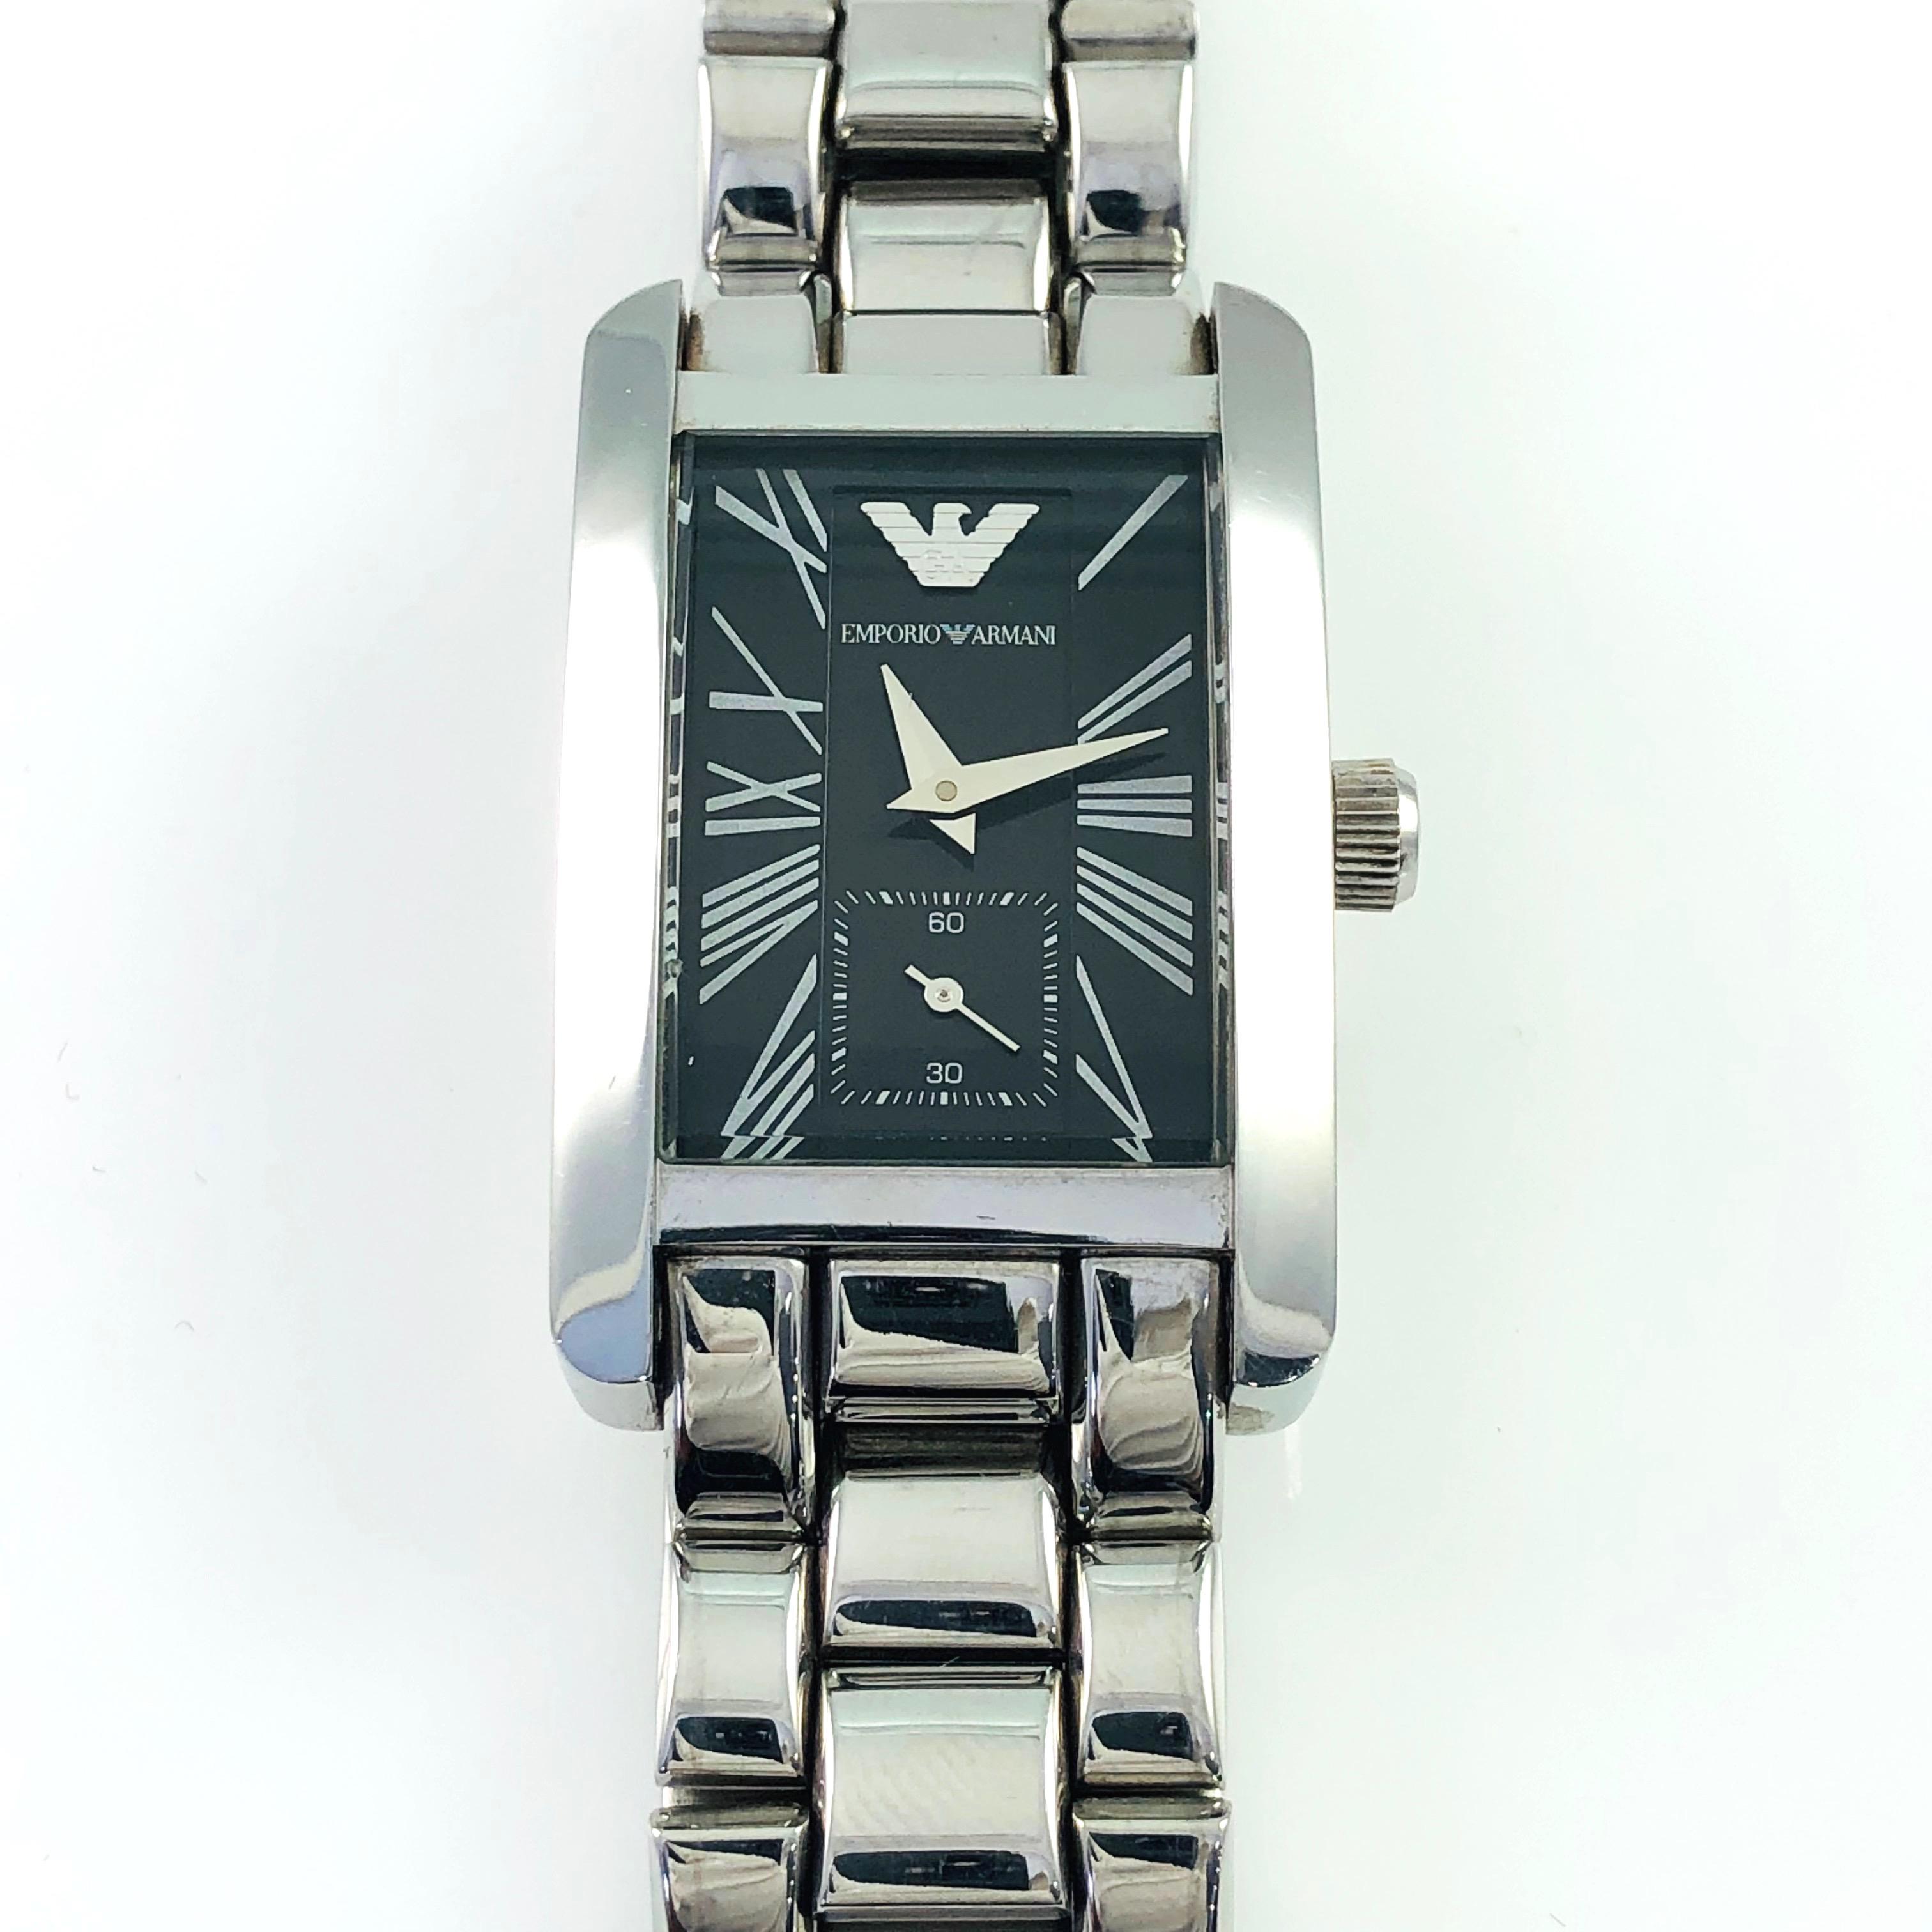 Estate Emporio Armani stainless steel wristwatch